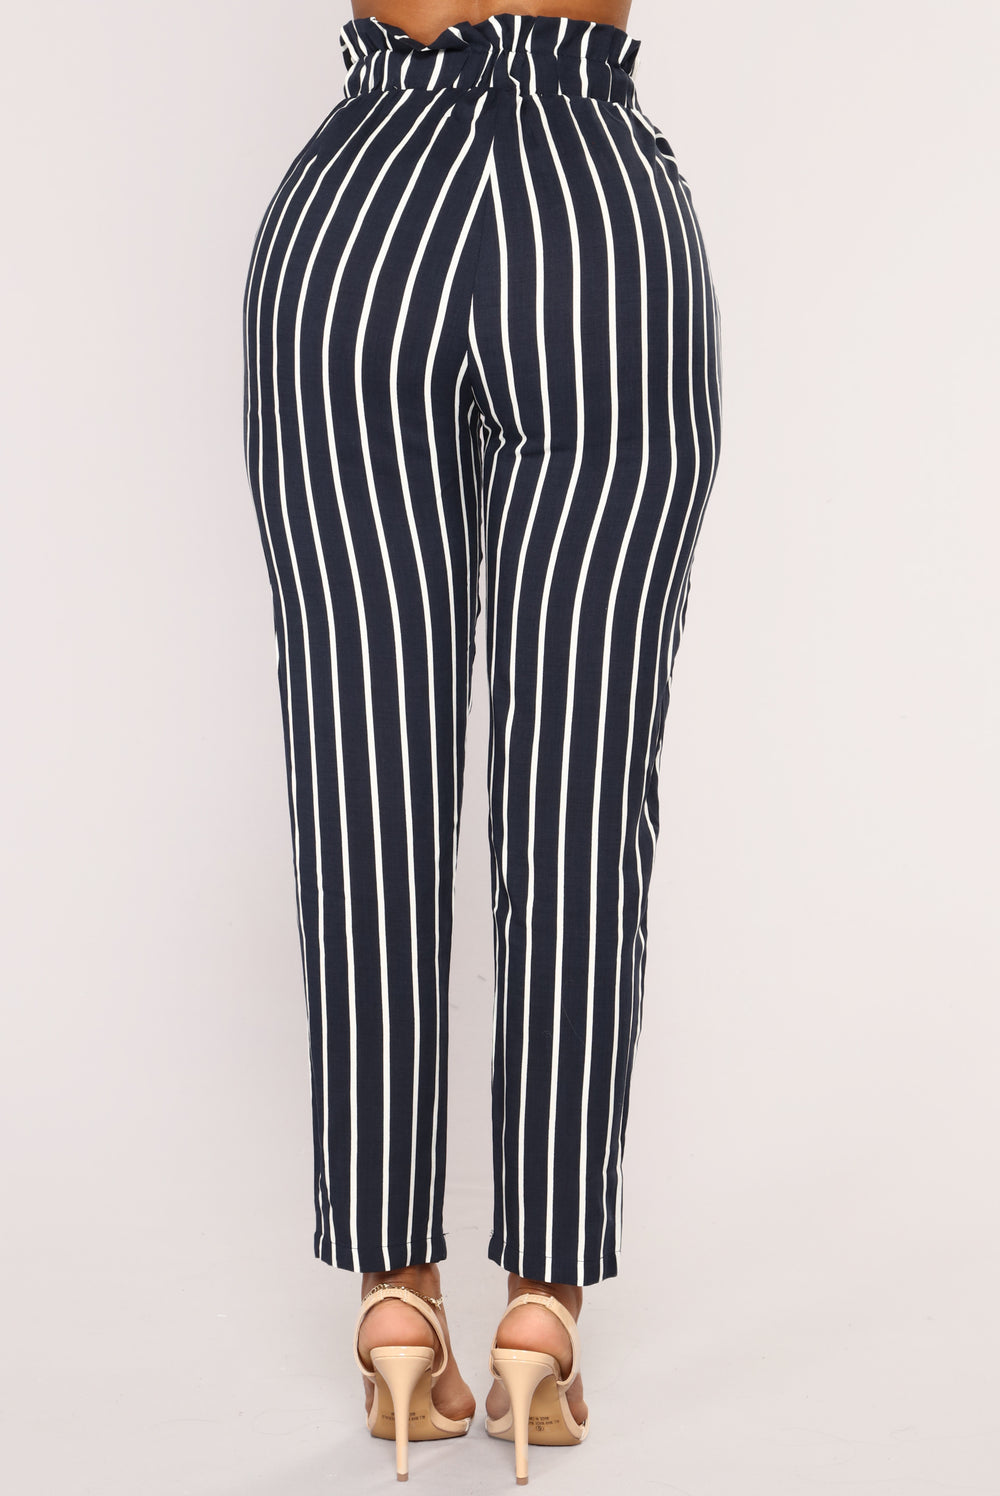 Jacklyn Stripe Pants - Navy/White